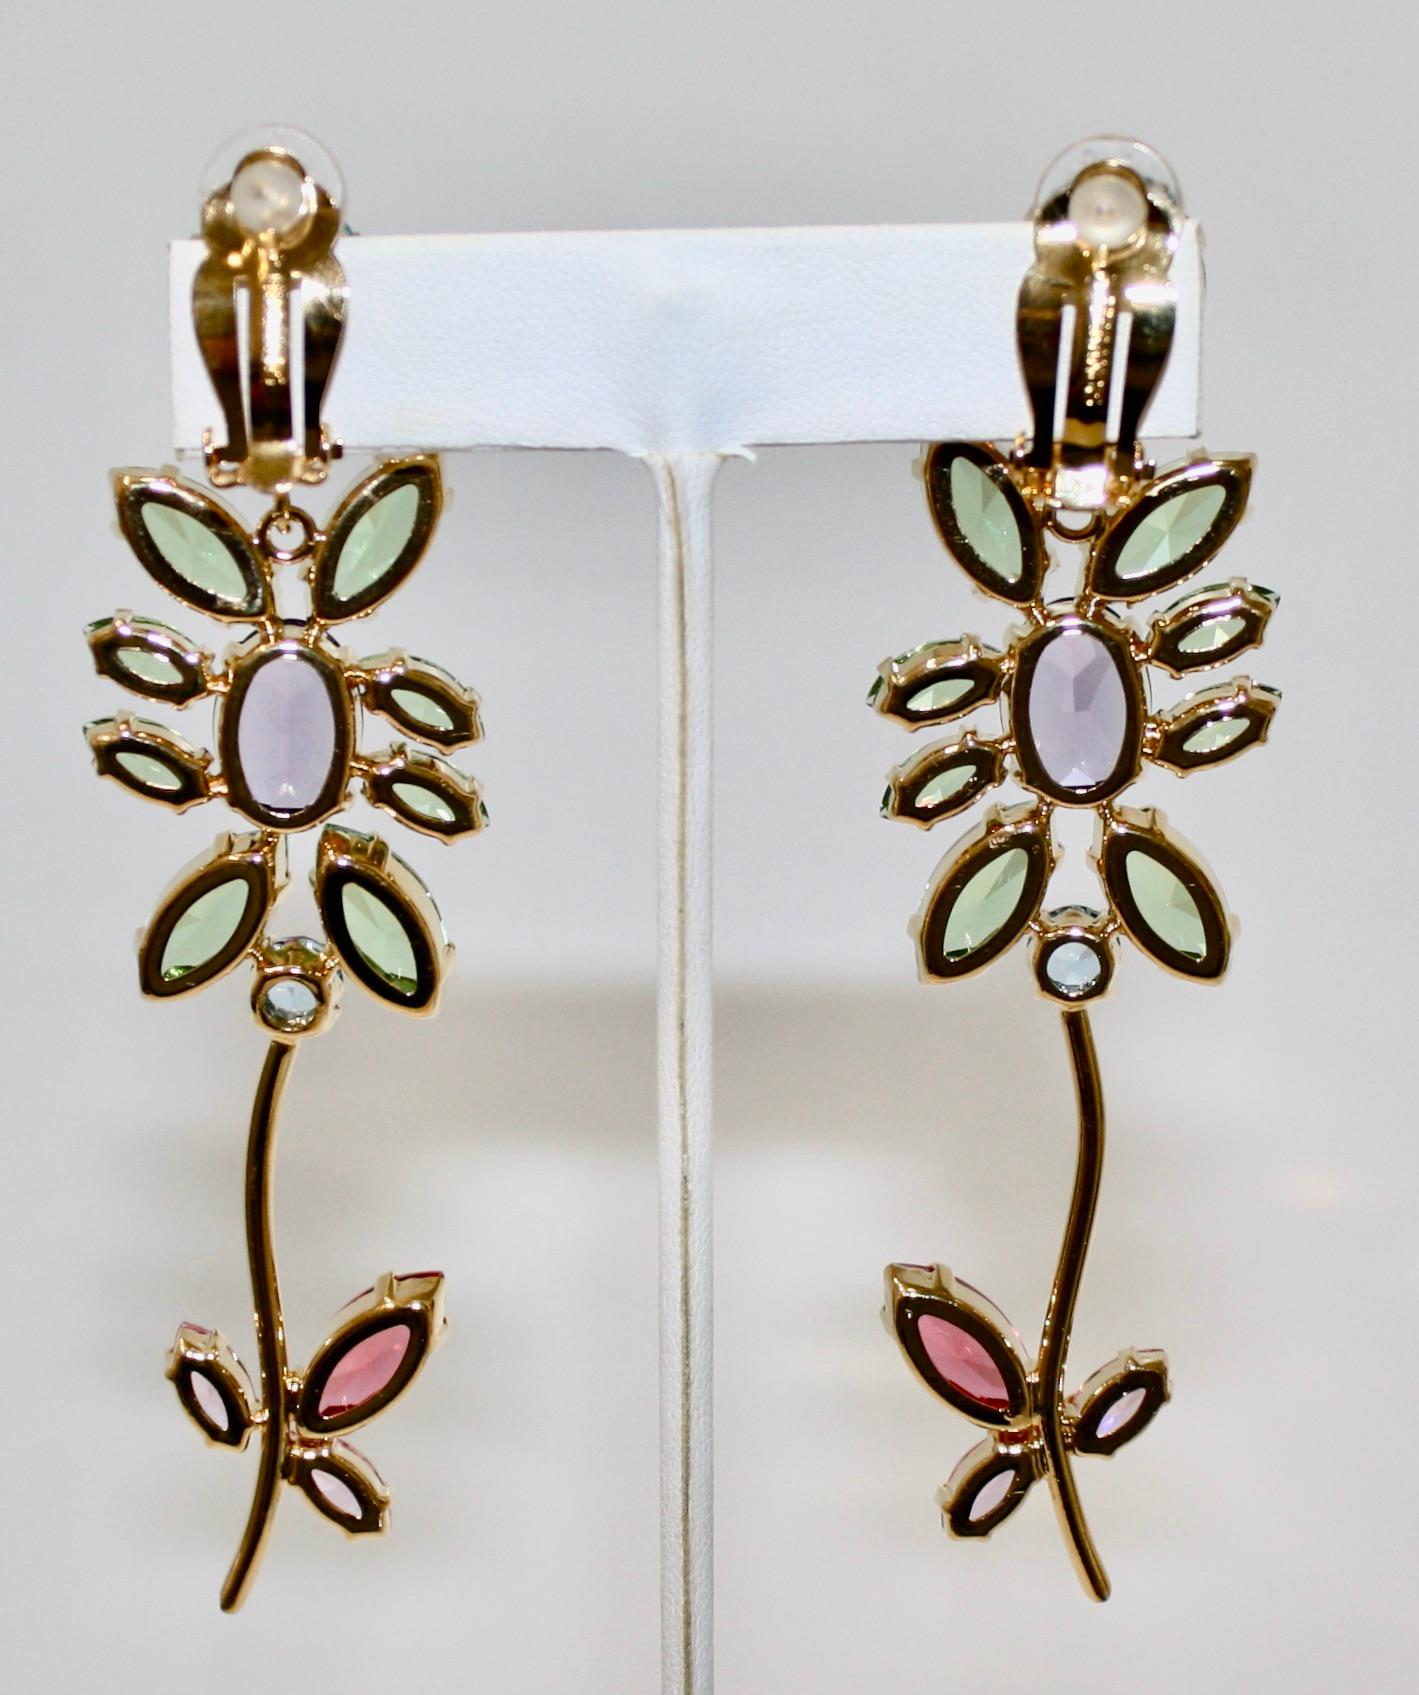 Philippe Ferrandis Flower and Stem Clip Earrings  For Sale 1